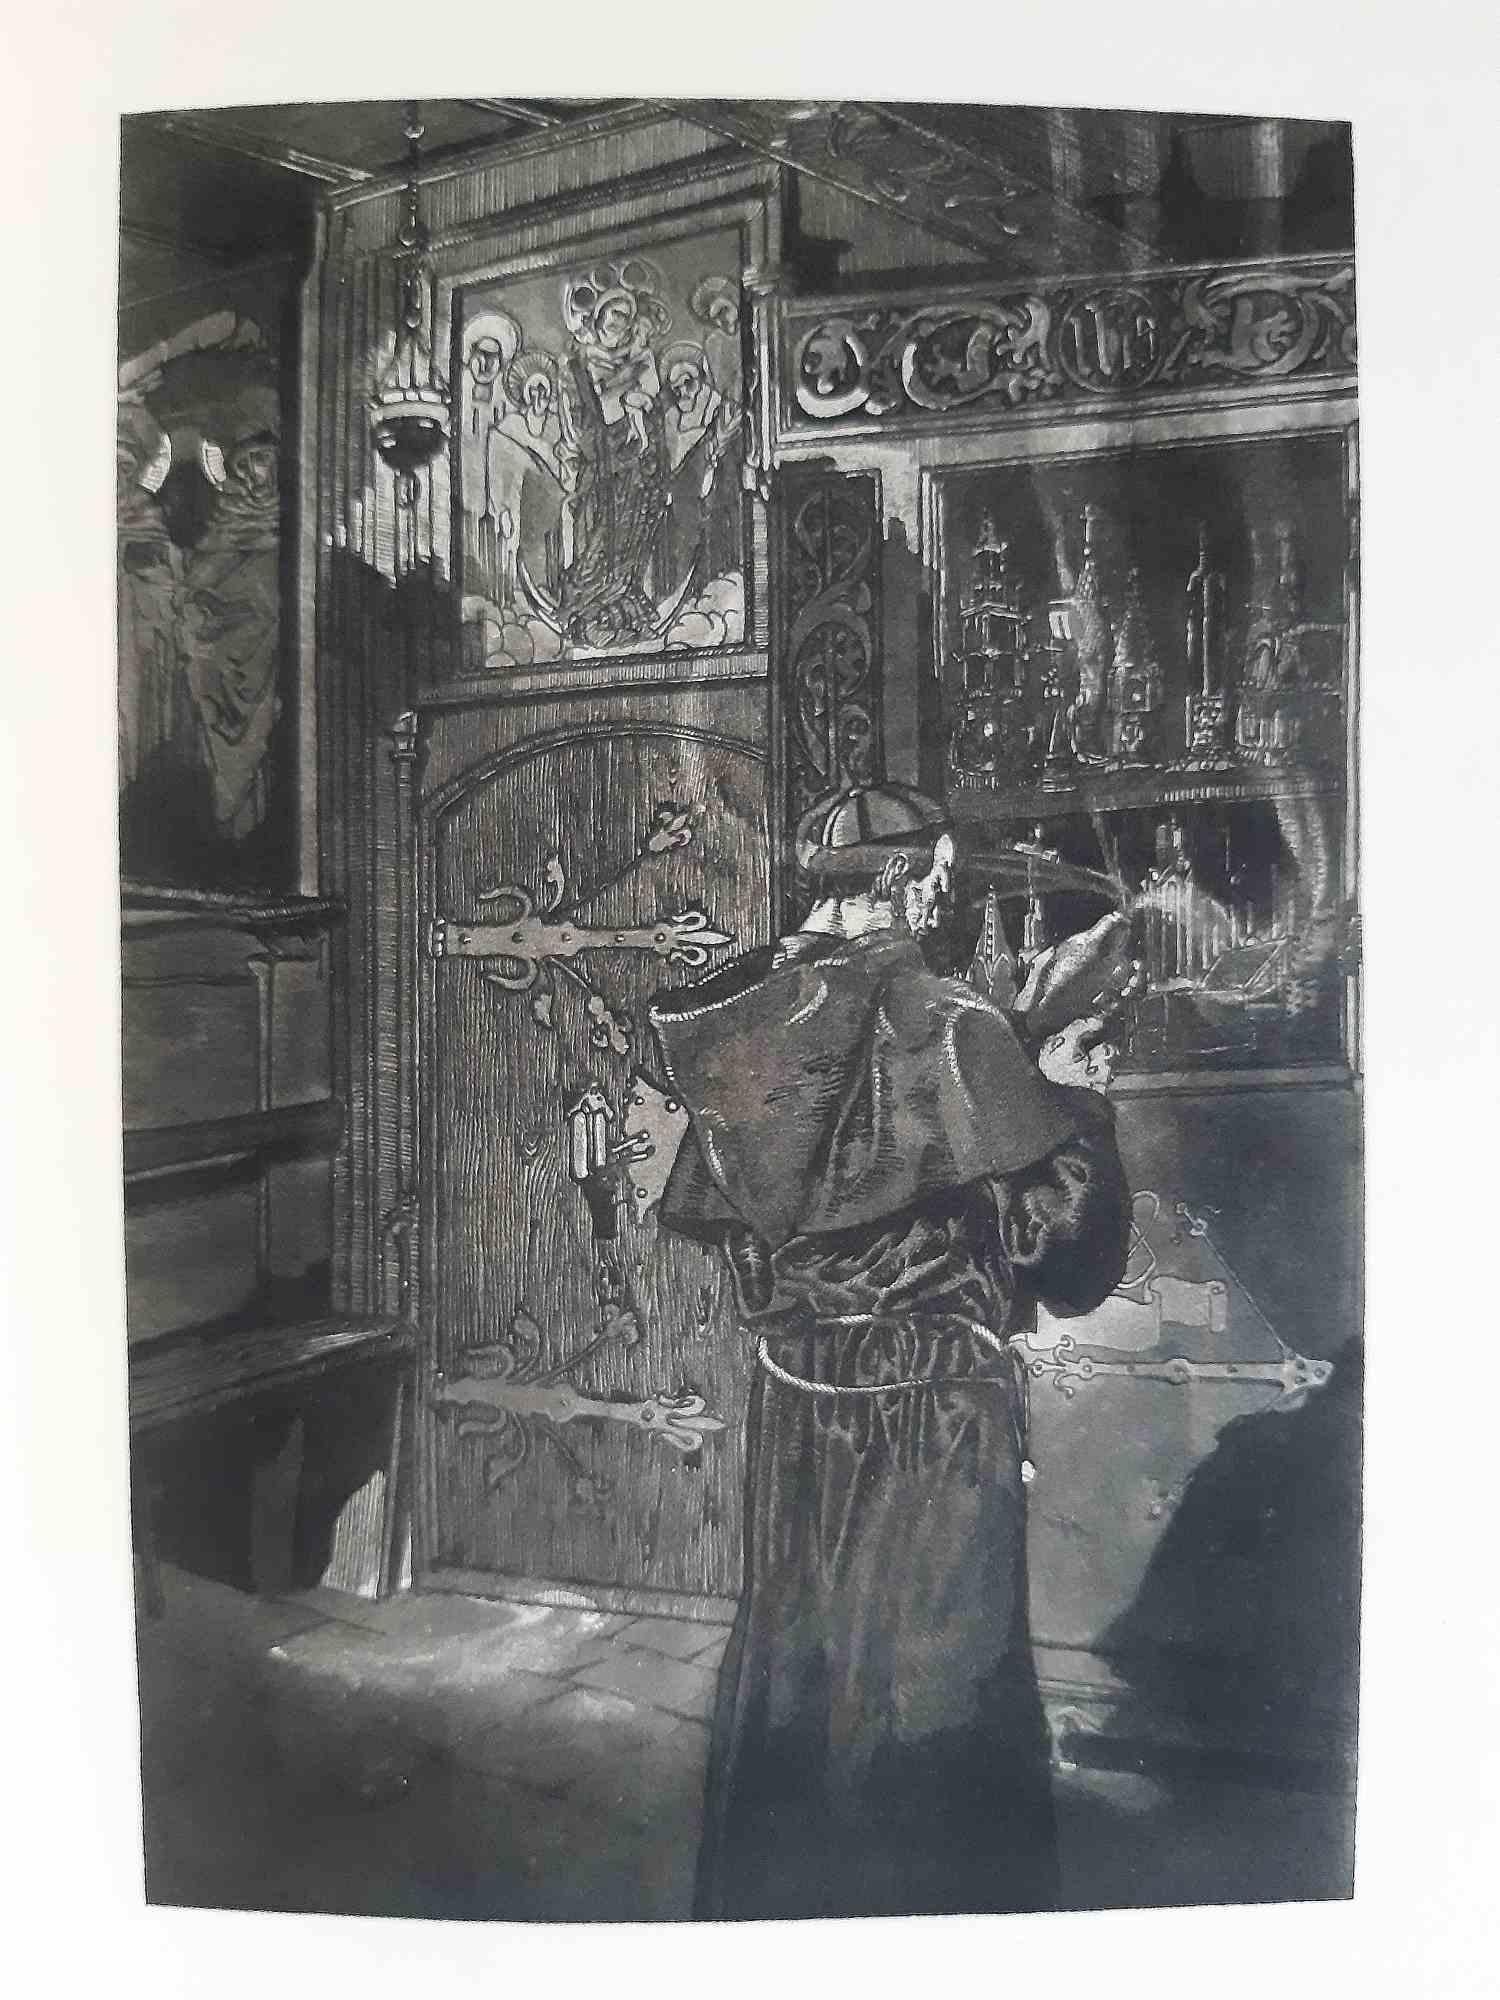 Die Elixiere des Teufels - Rare Book Illustrated by Hugo Steiner-Prag - 1907 For Sale 5